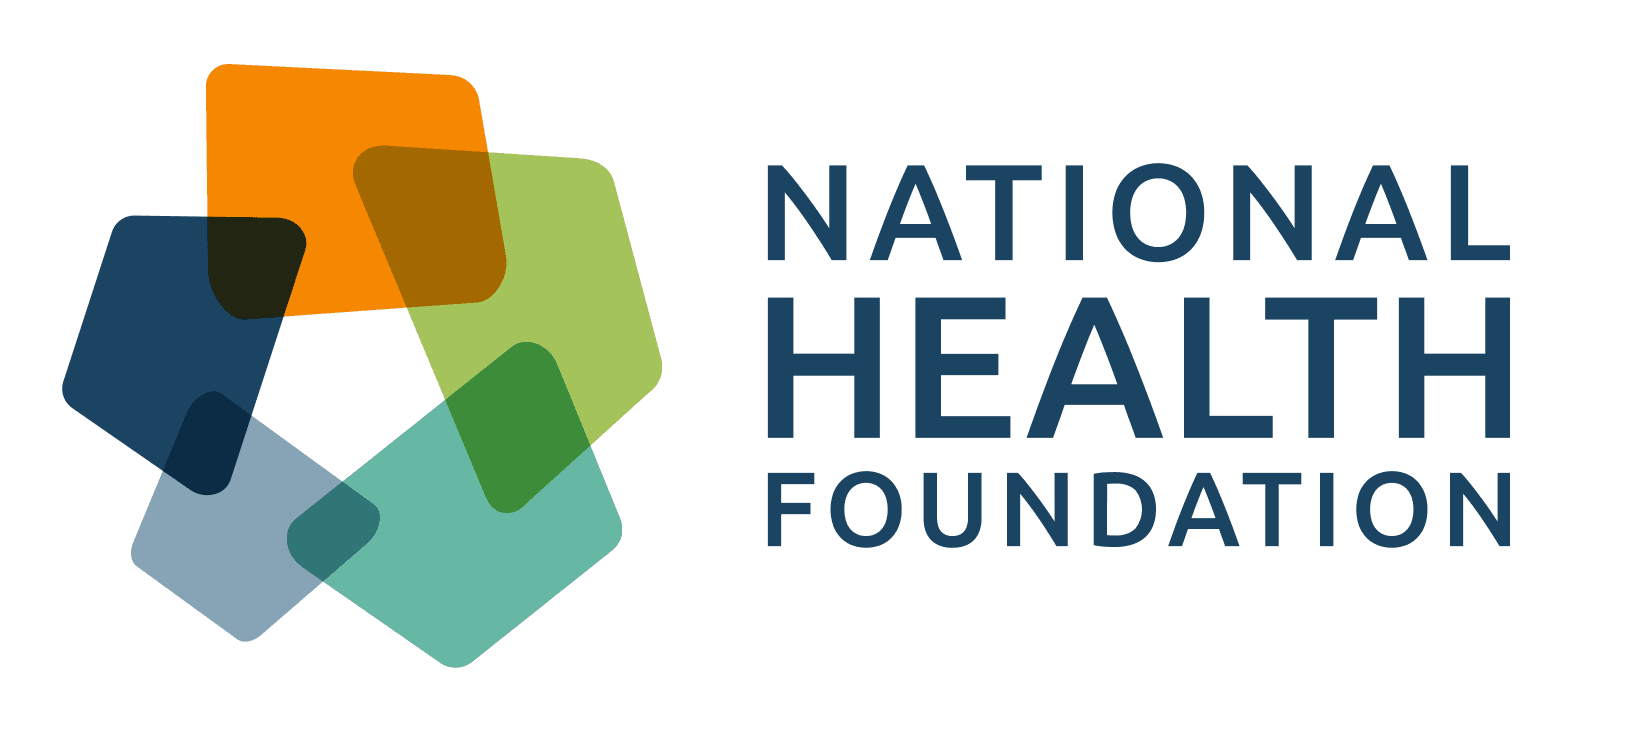 National Health Foundation logo